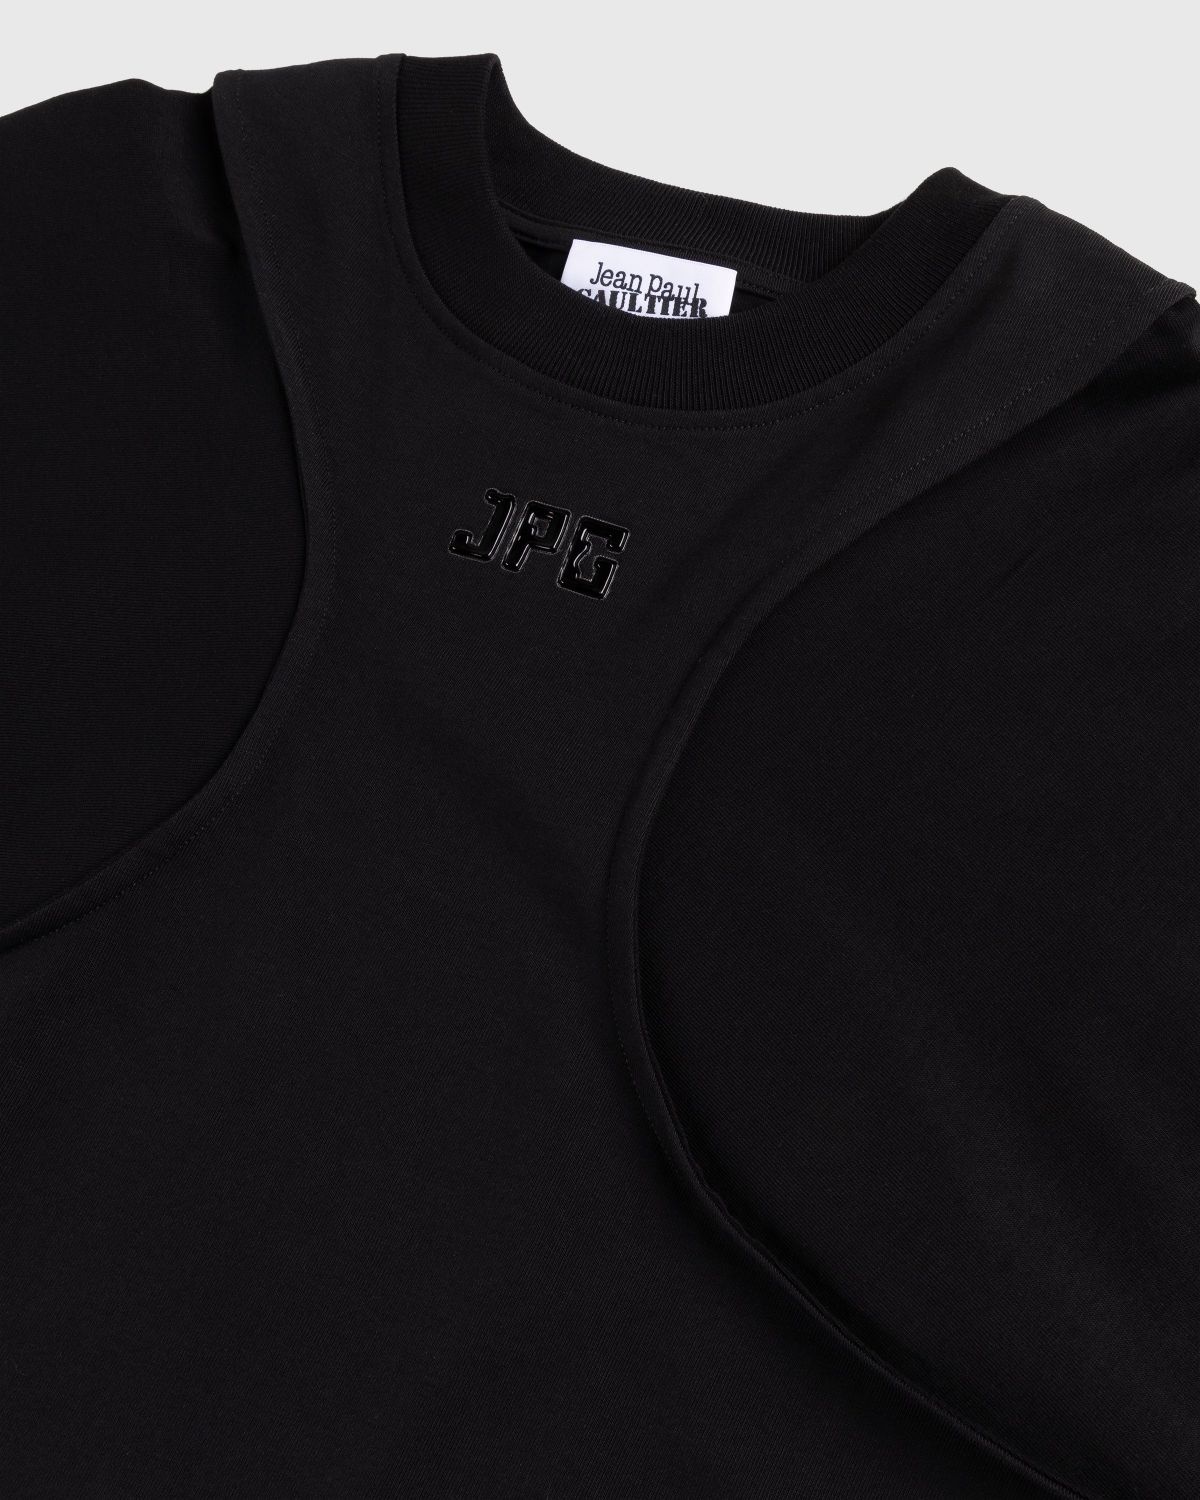 Jean Paul Gaultier – JPG T-Shirt Black - 3